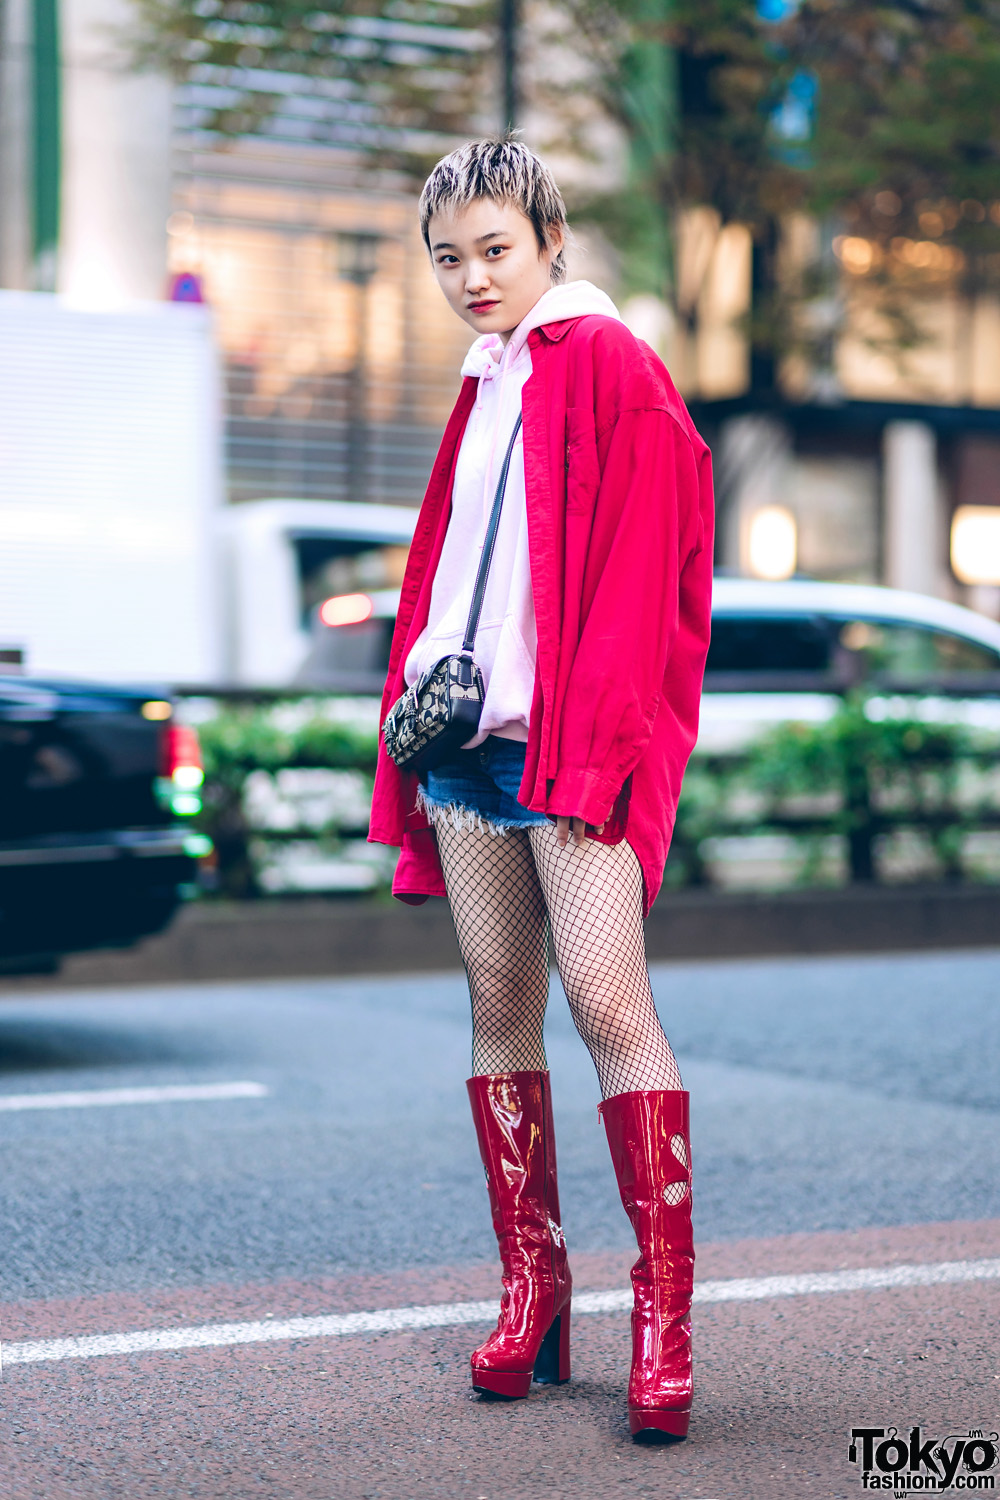 Tokyo Streetwear Style w/ Pixie Hair, Hoodie Sweater, Fringed Denim Shorts Over Fishnets, OK Cutout Boots & Coach Crossbody Bag